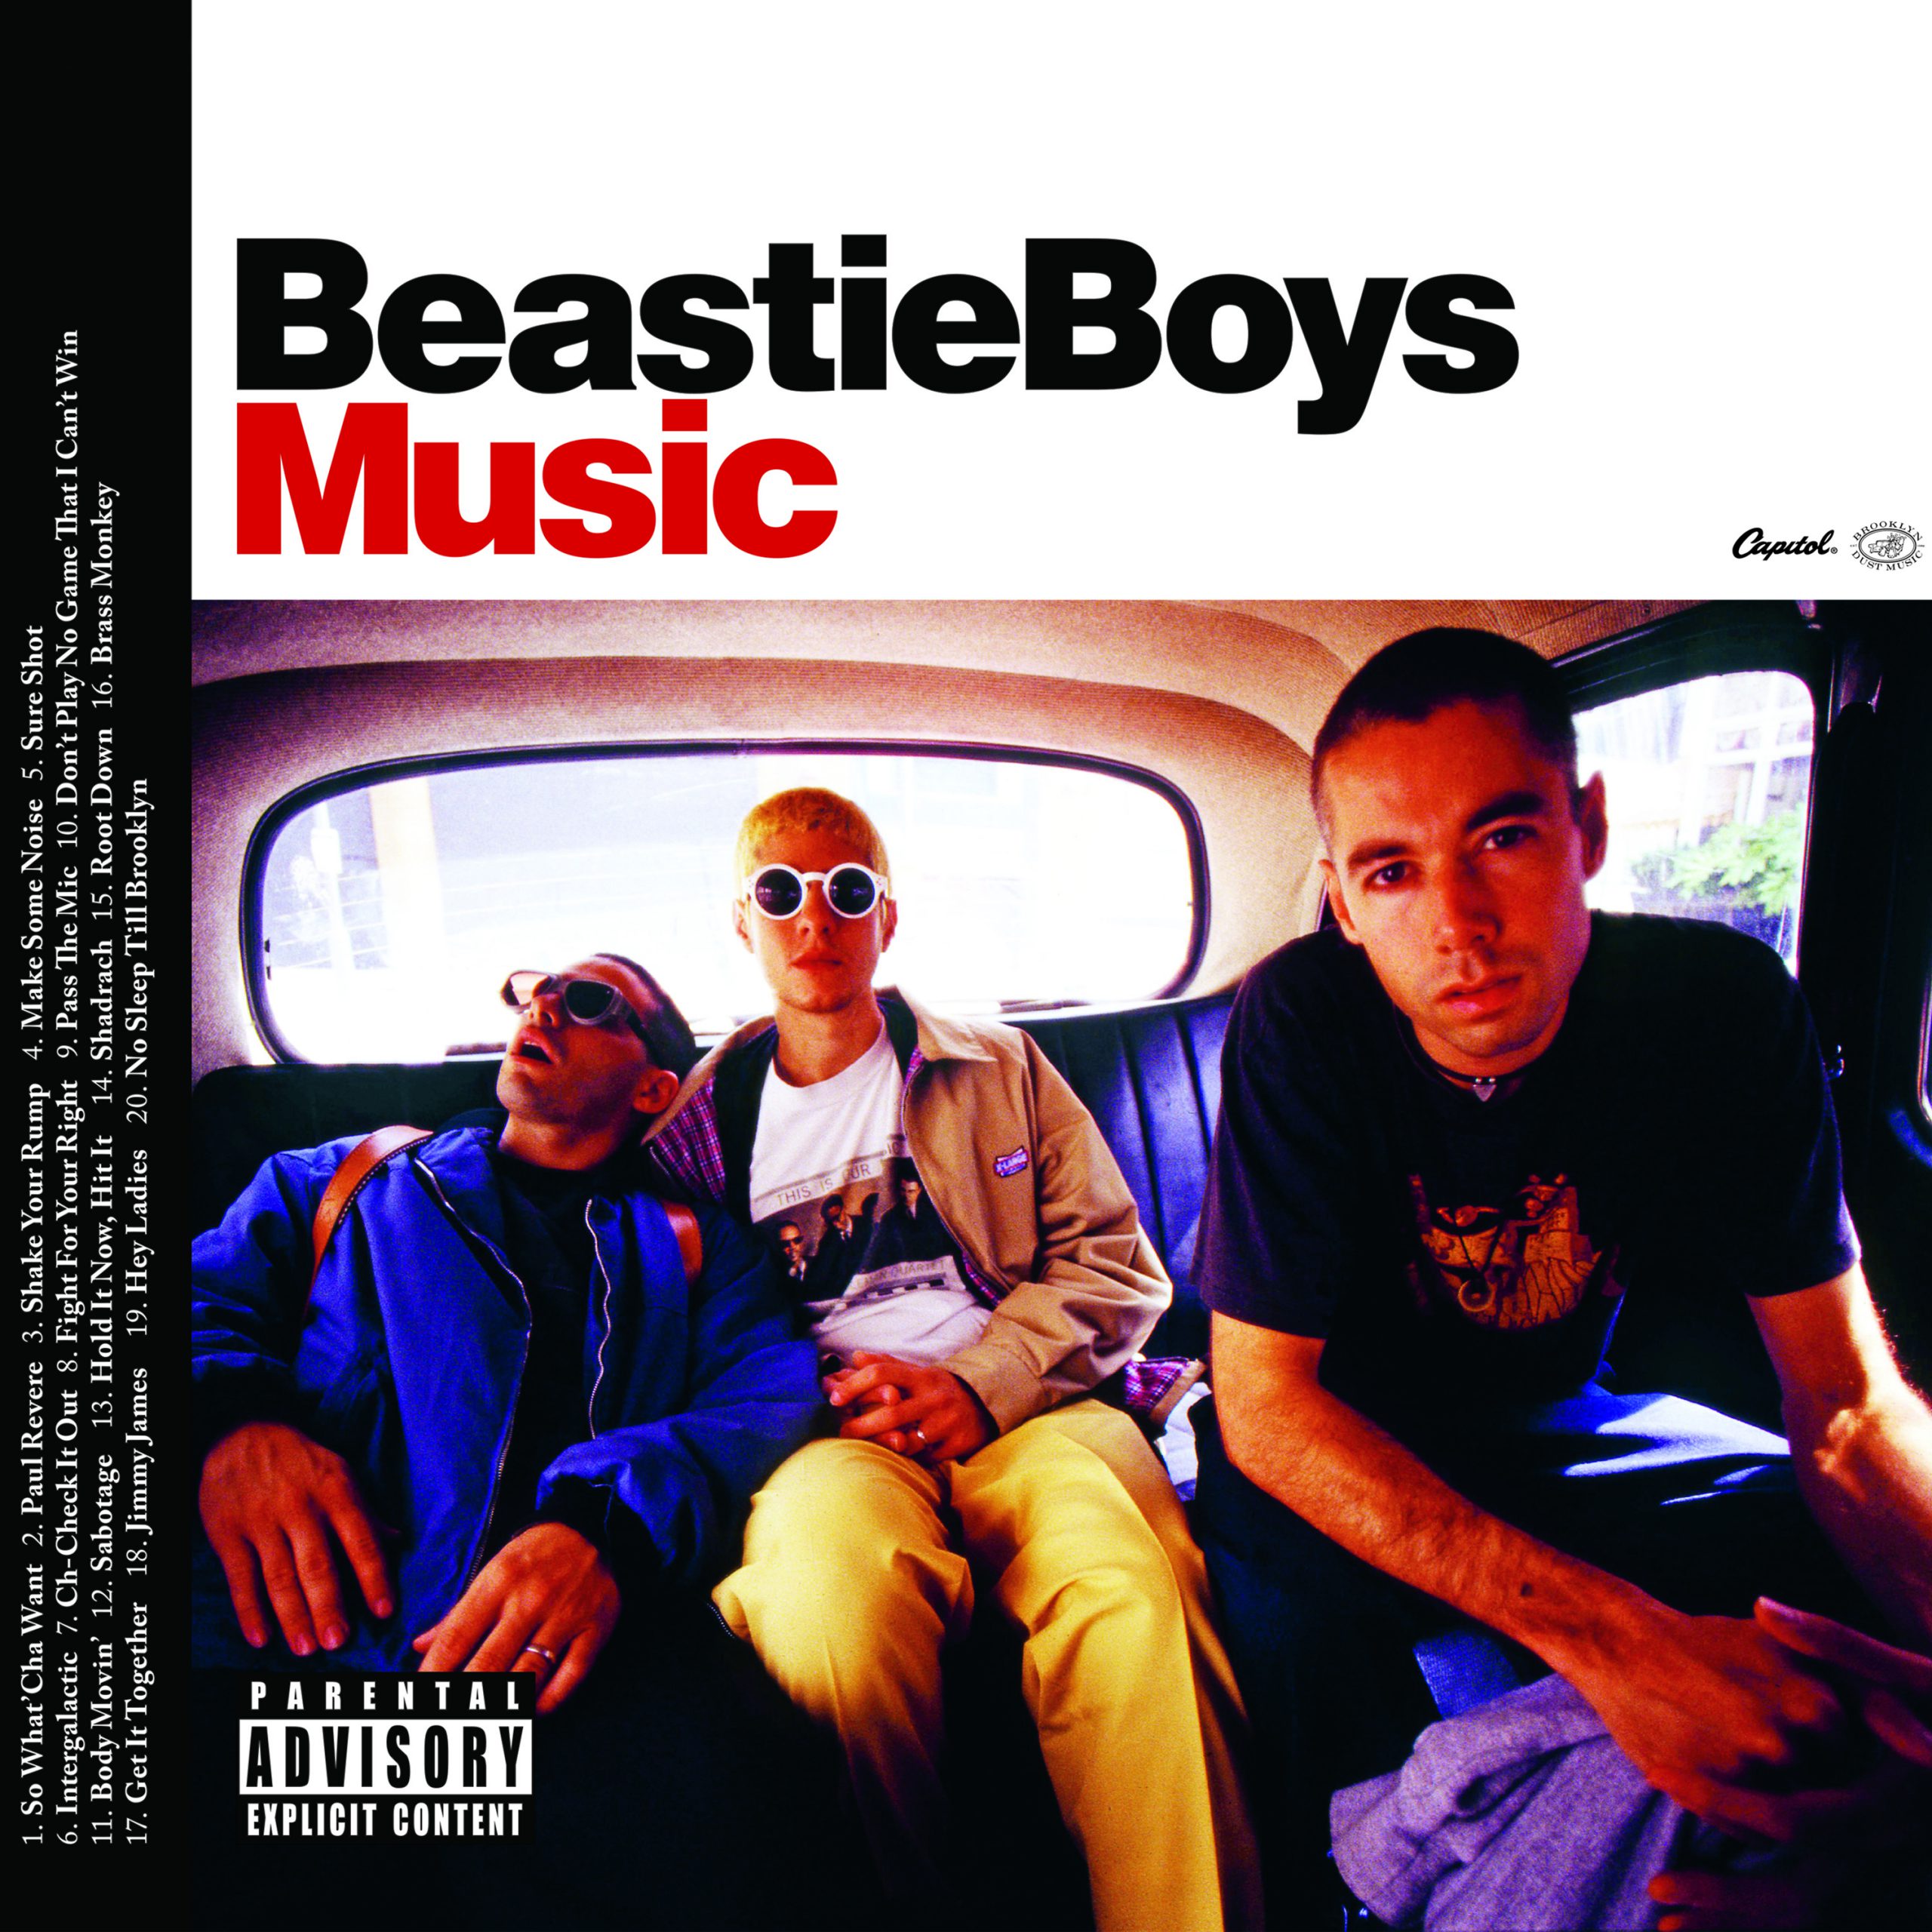 Beastie Boys - Make Some Noise